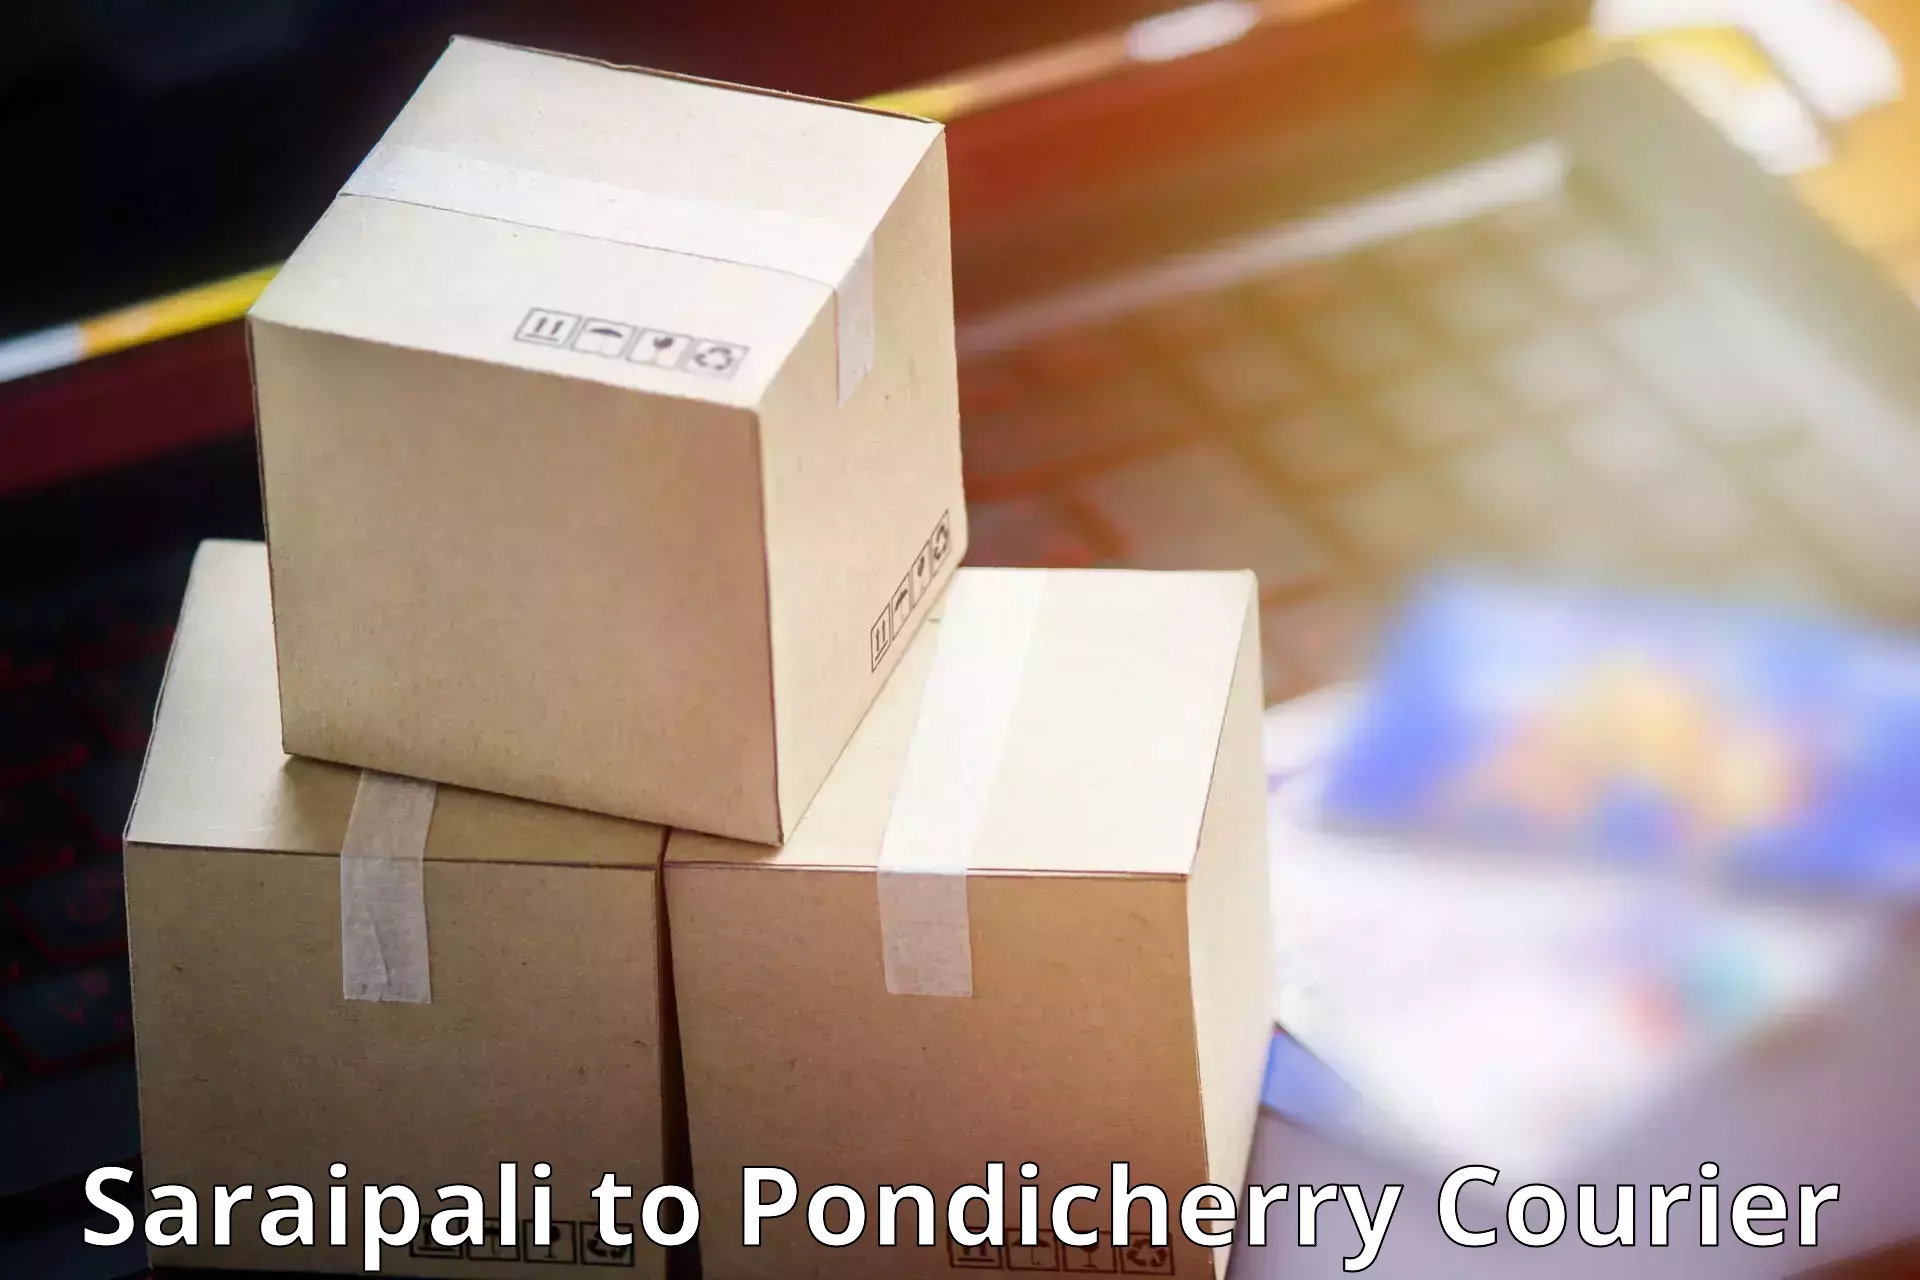 Business delivery service Saraipali to Pondicherry